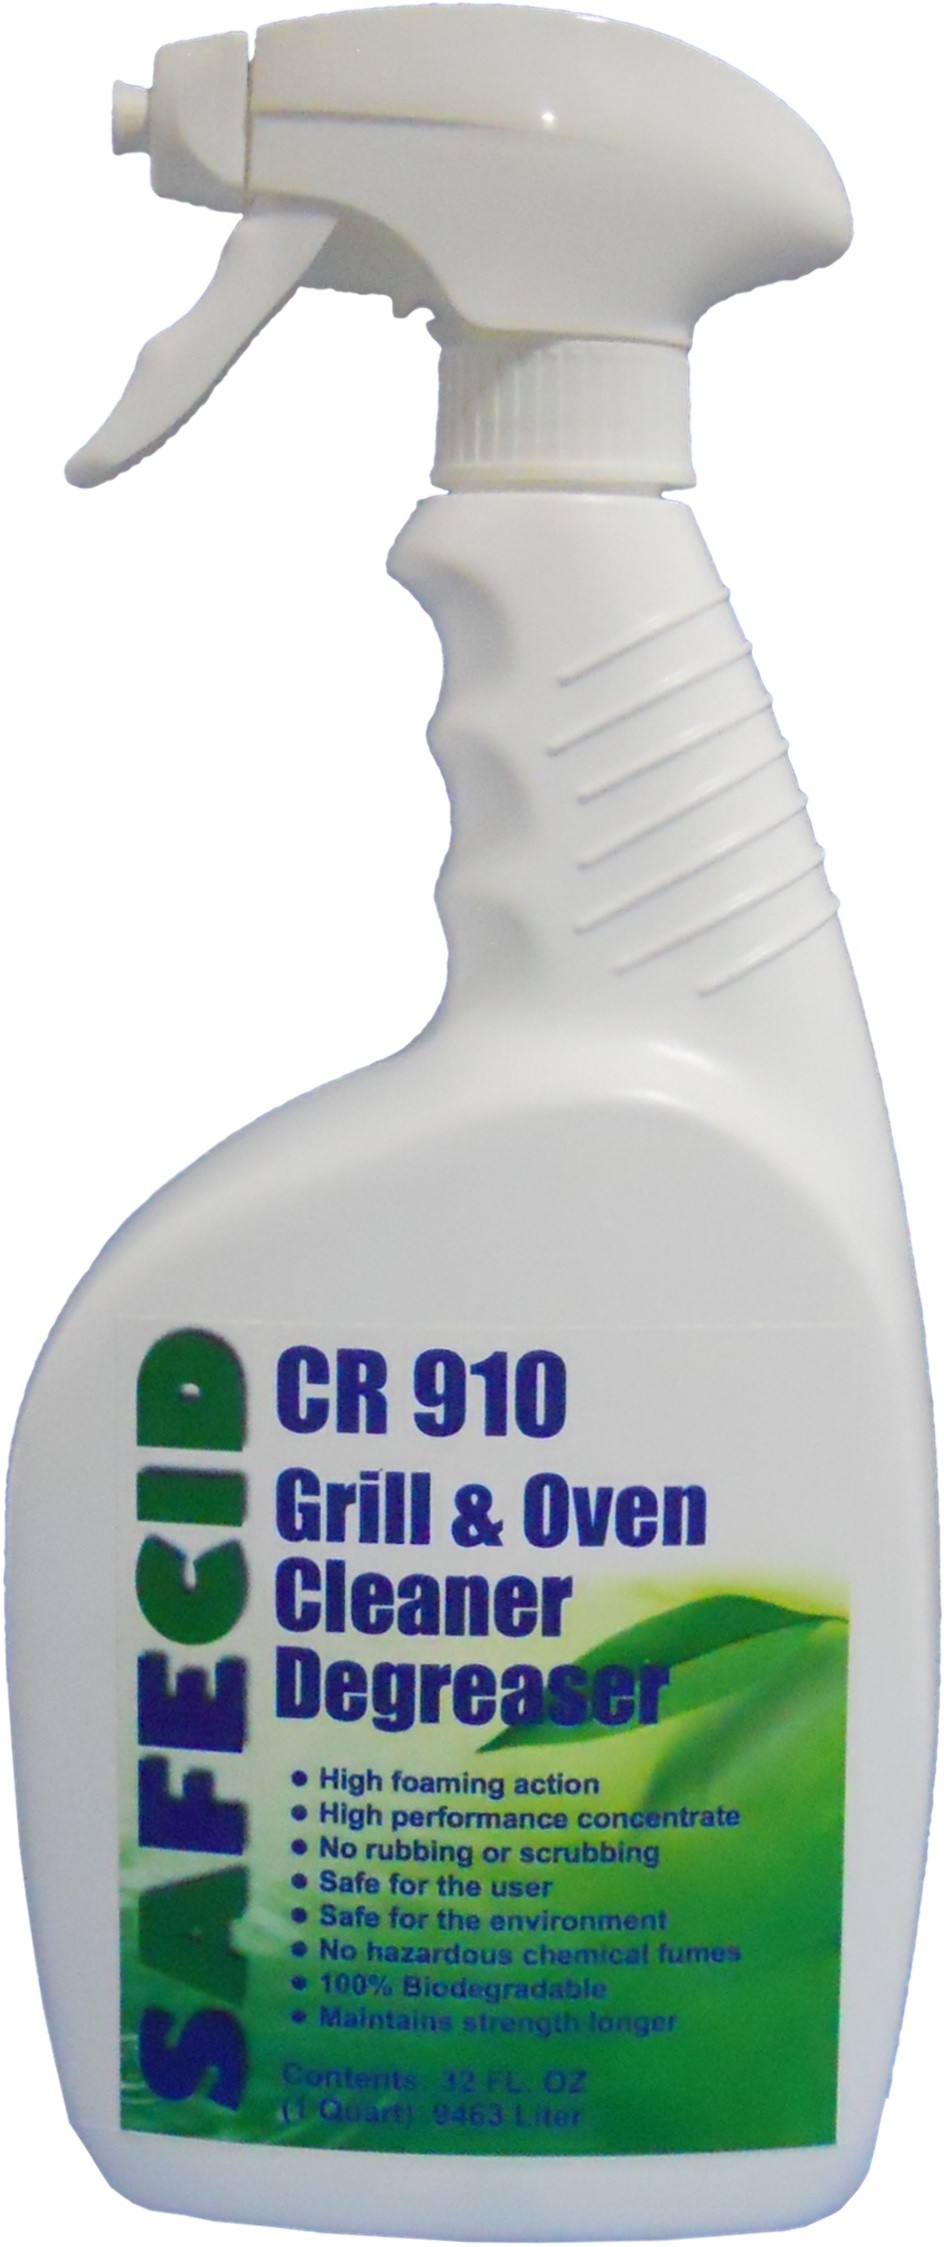 safecid cr 910 grill dregreaser